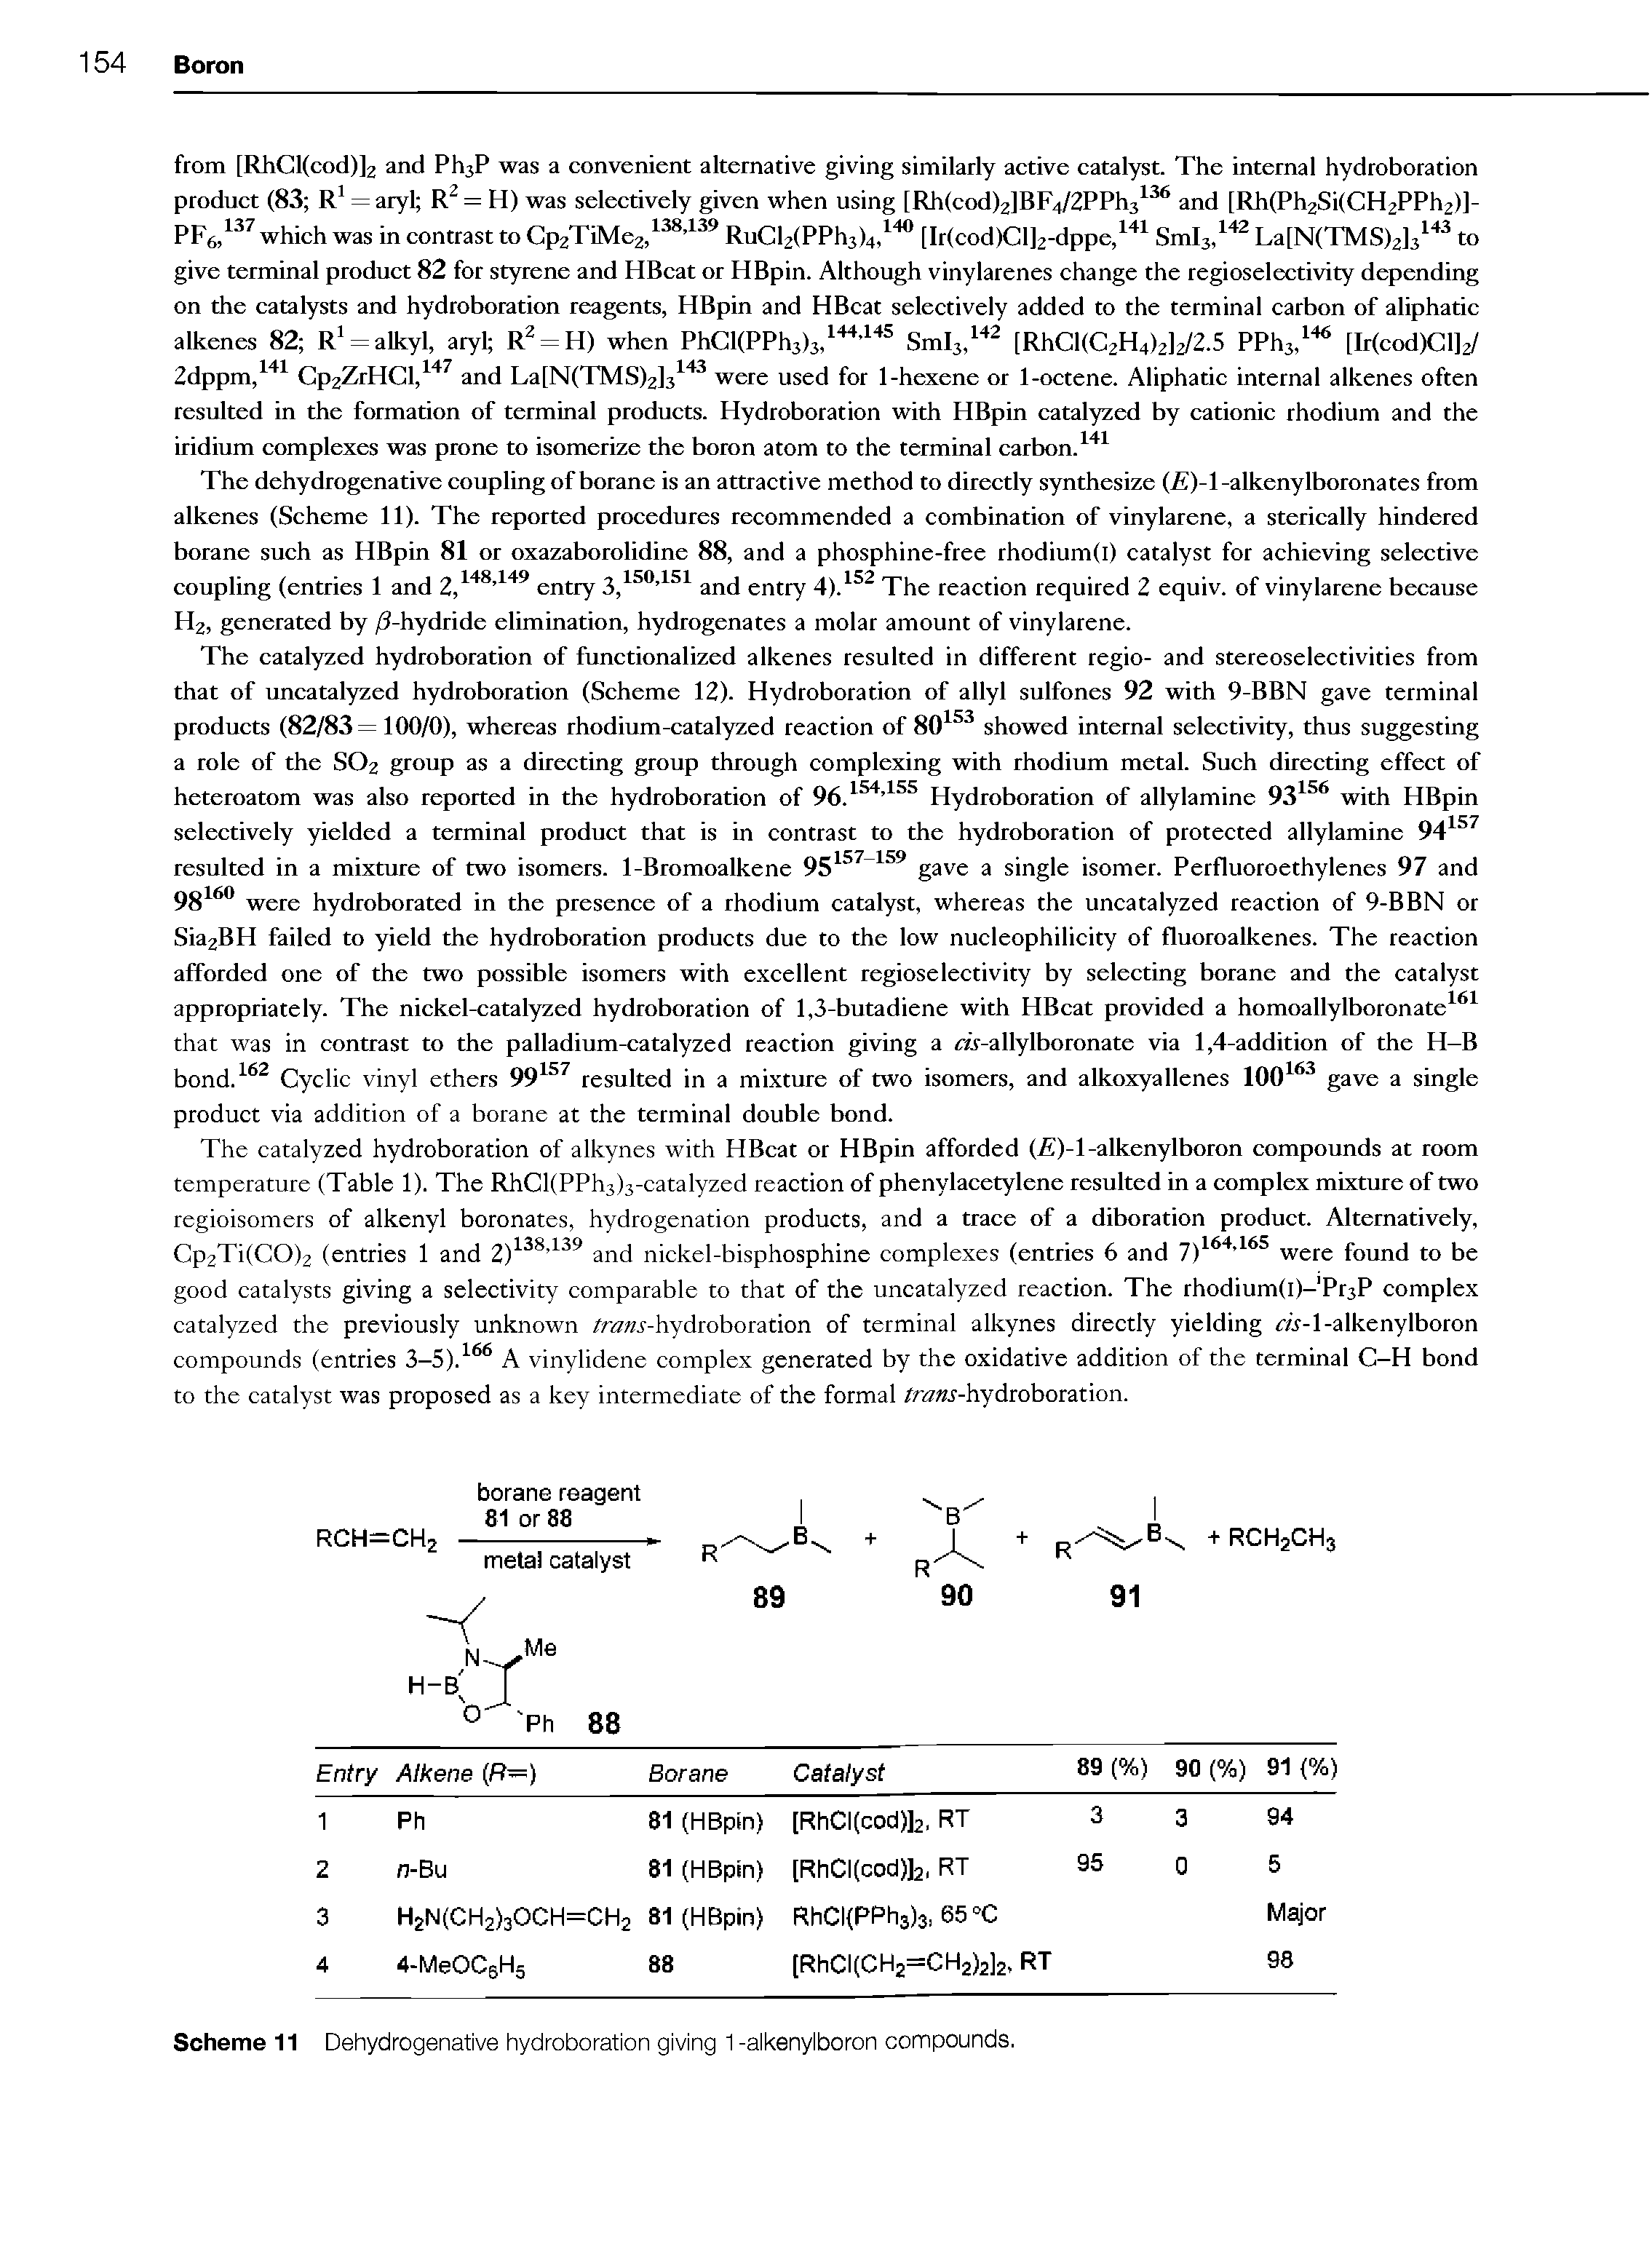 Scheme 11 Dehydrogenative hydroboration giving 1 -alkenylboron compounds.